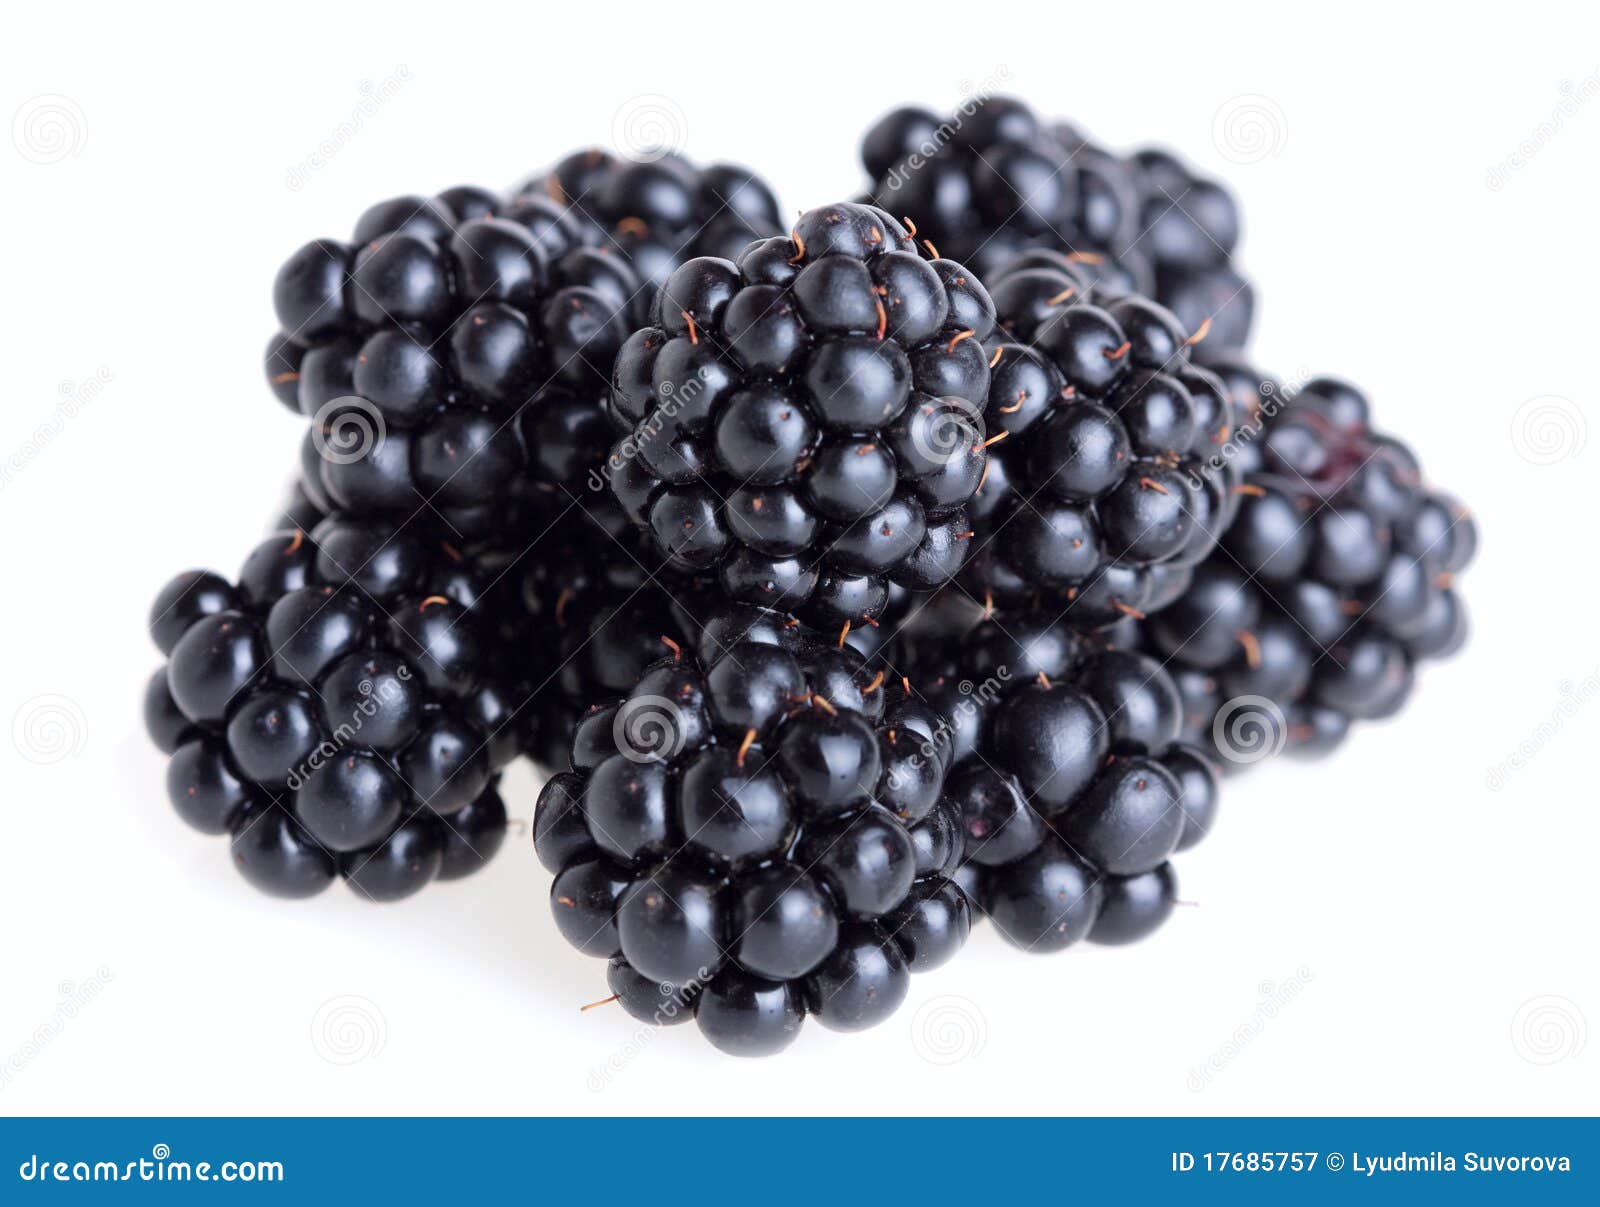 Pile of blackberries stock image. Image of organic, healthy - 17685757